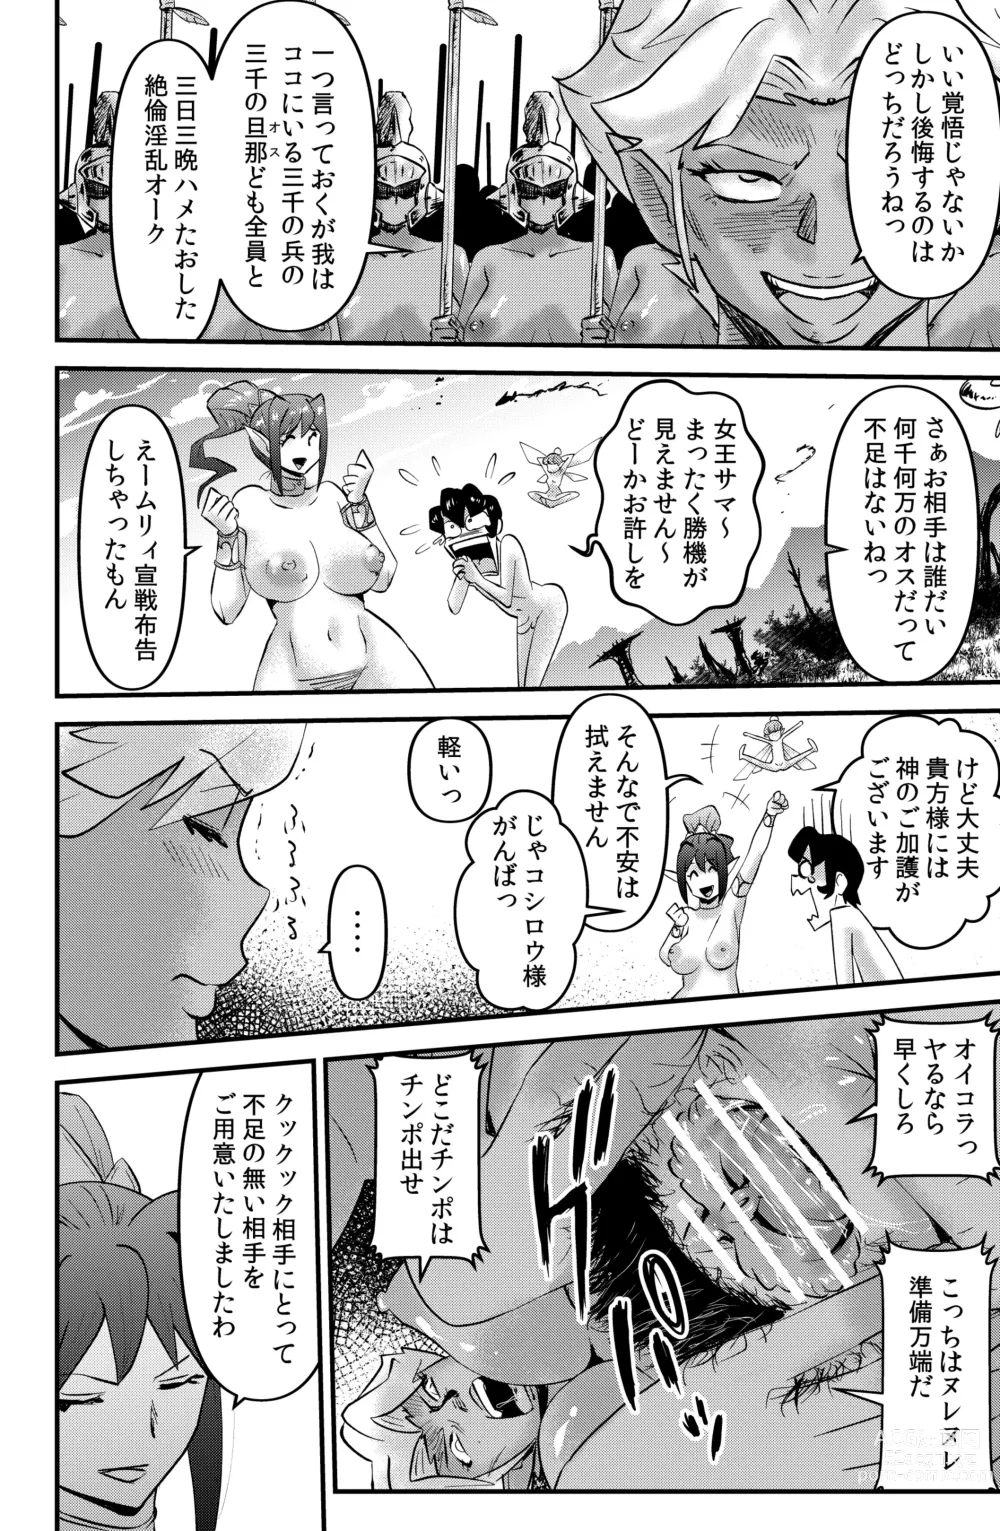 Page 14 of doujinshi Isekai Tensei Mono